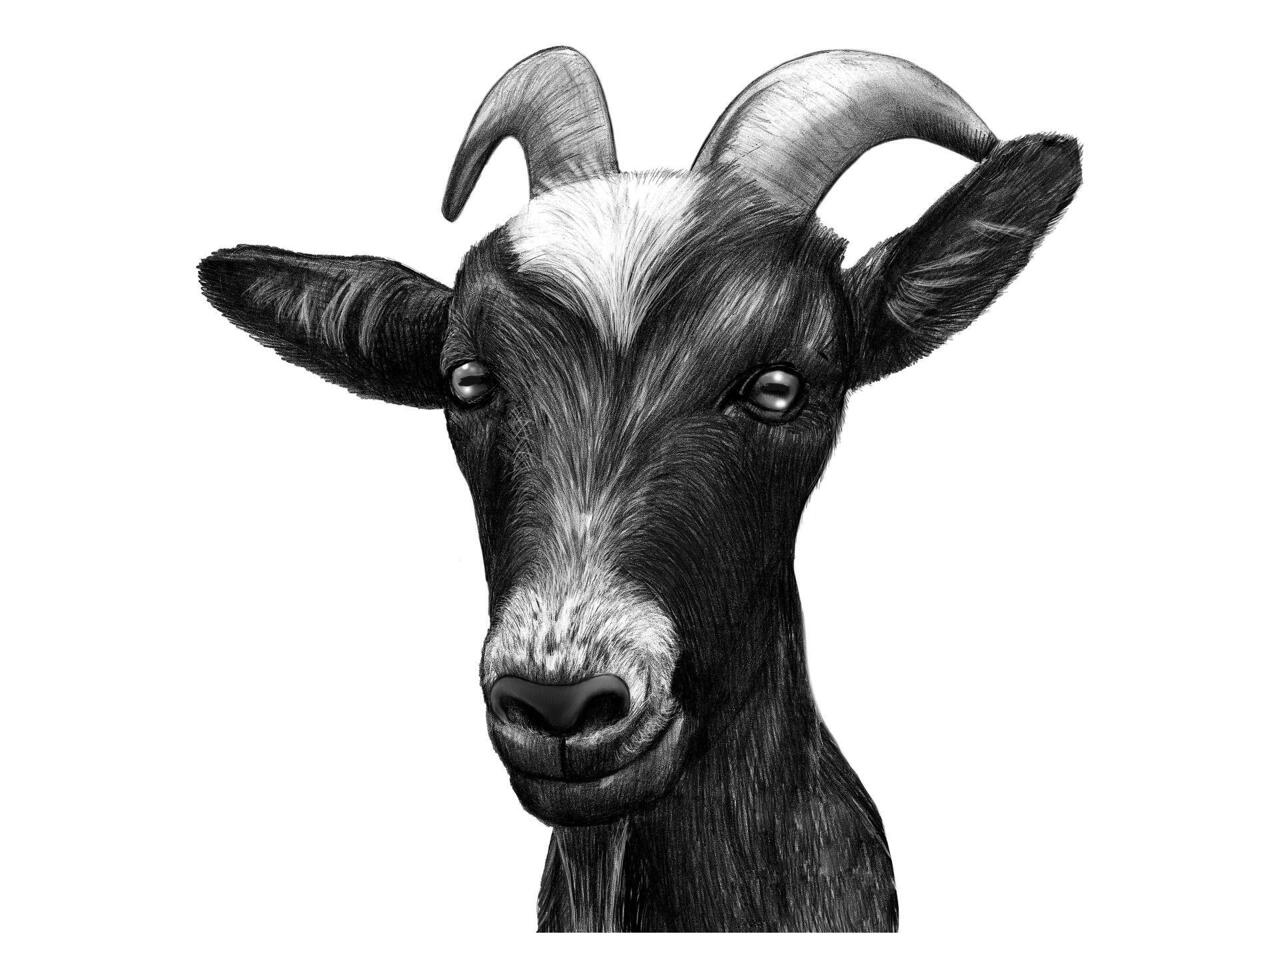 She goat stock illustration. Illustration of drawing - 112452587